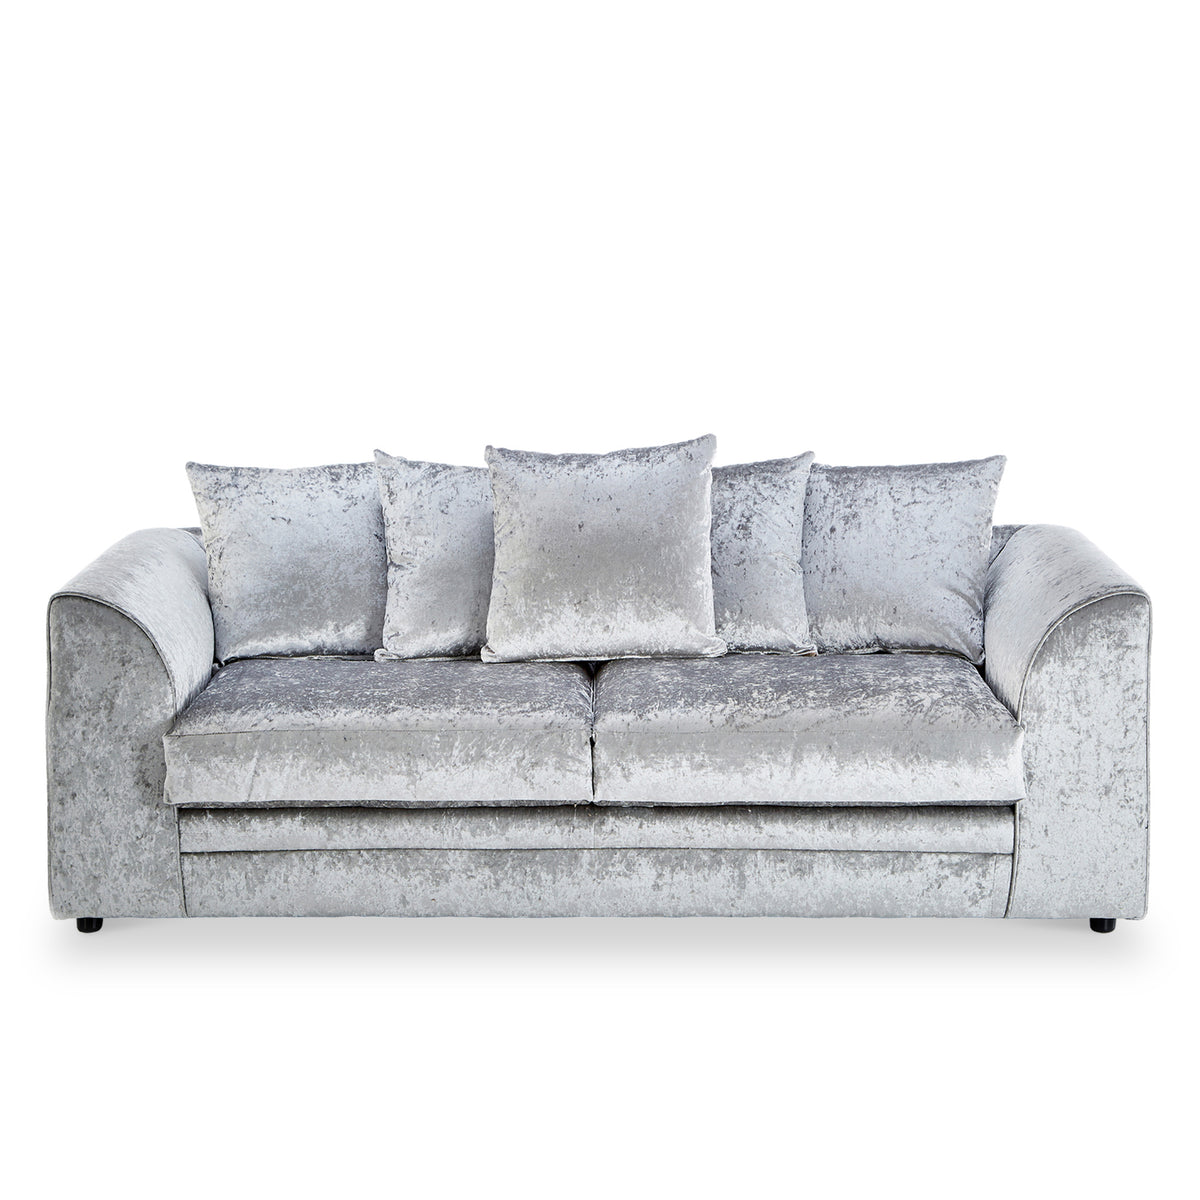 Tamara Silver Crushed Velvet 3 Seater Sofa from Roseland furniture